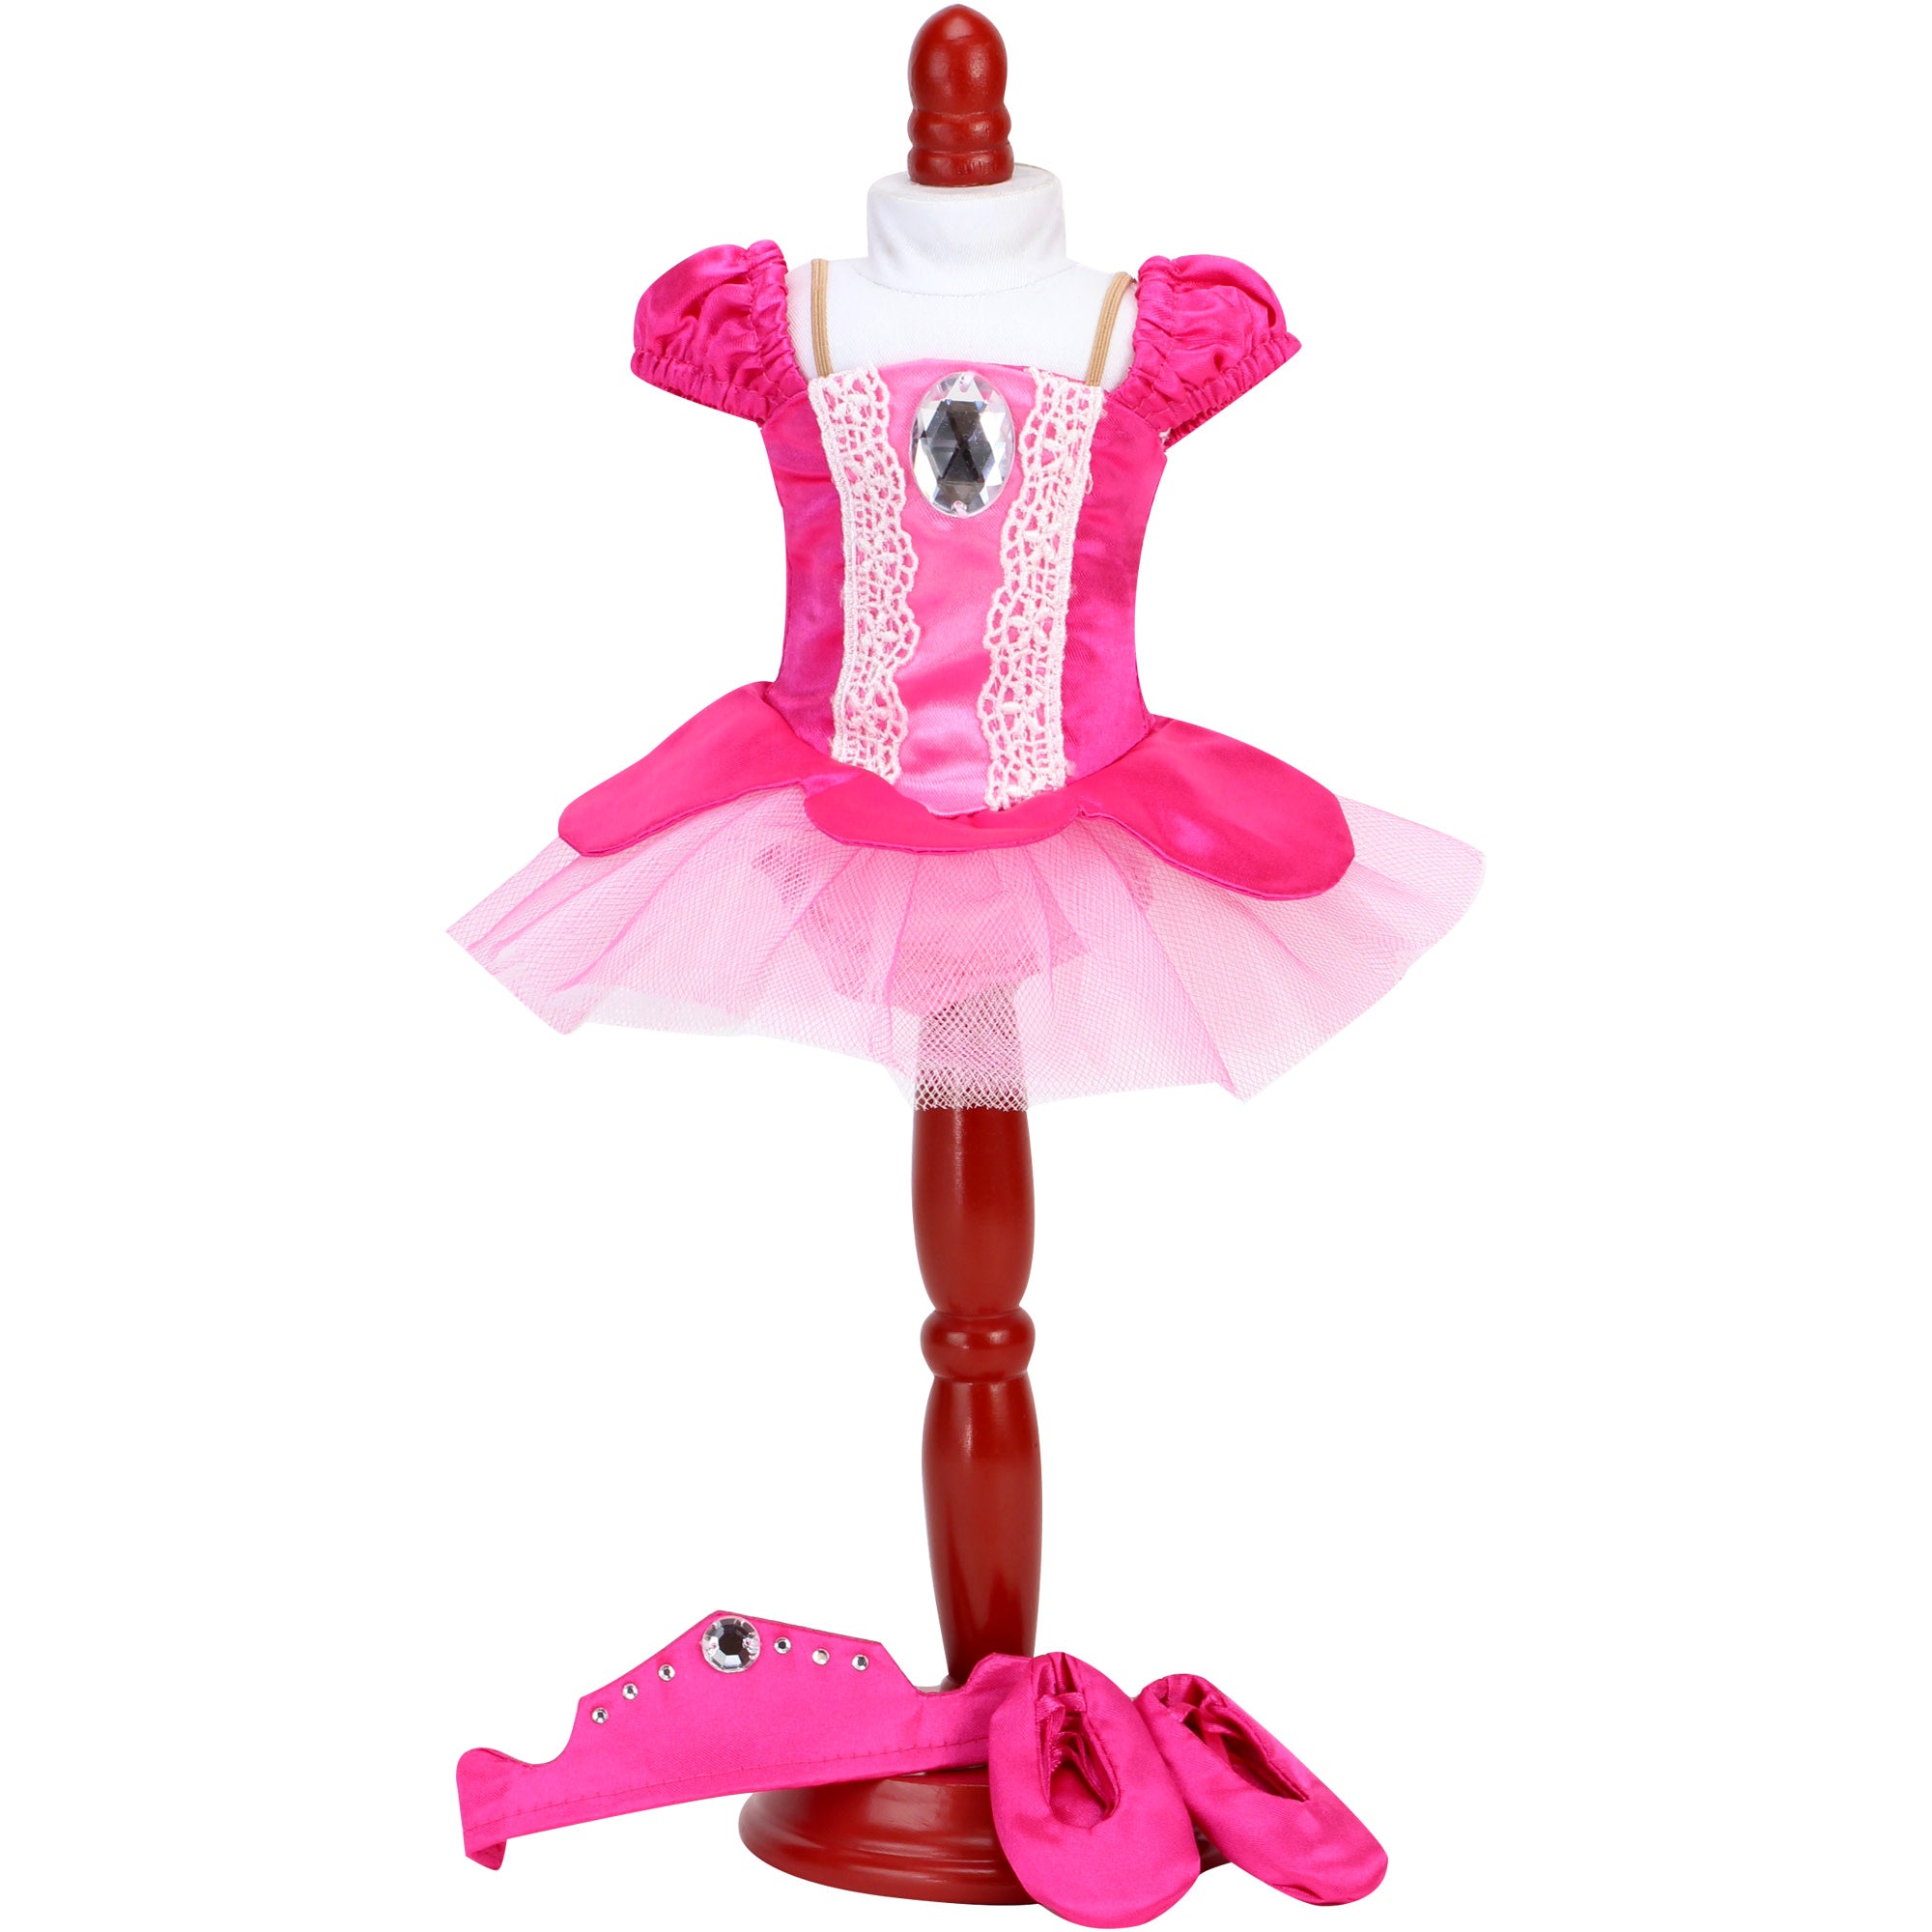 Sophia's Ballet Recital Costume for 14.5" Dolls, Hot Pink